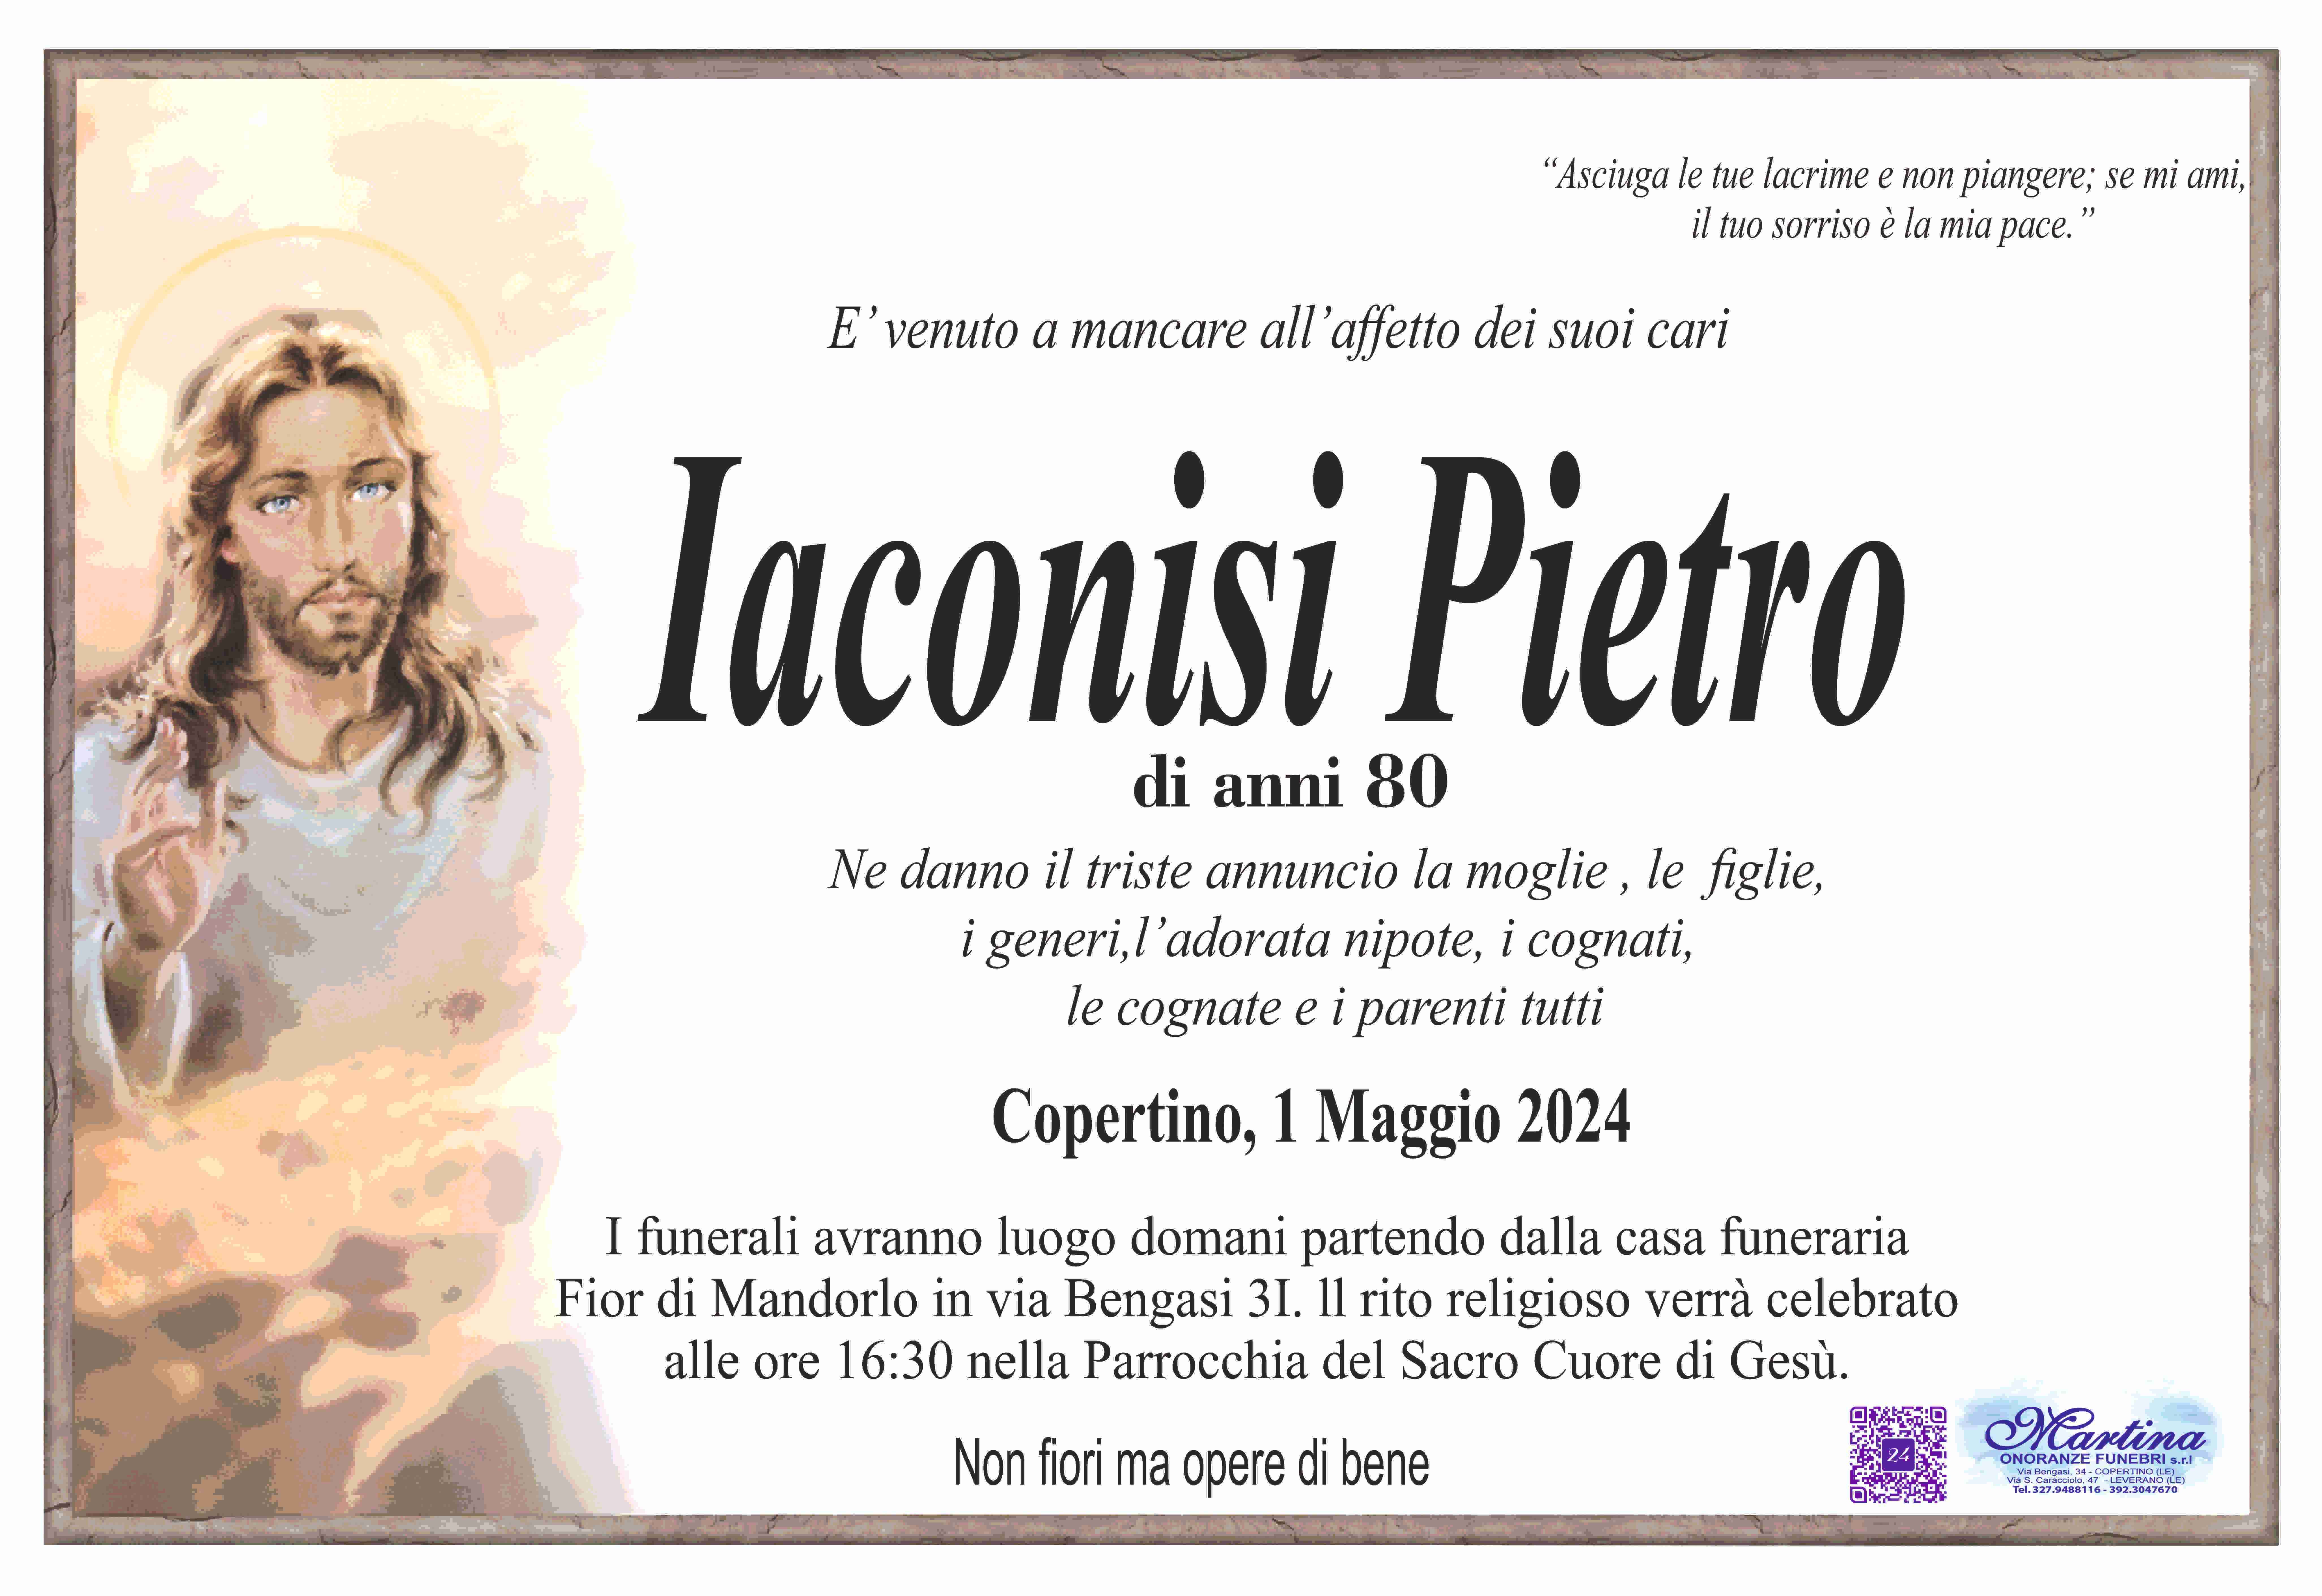 Pietro Iaconisi